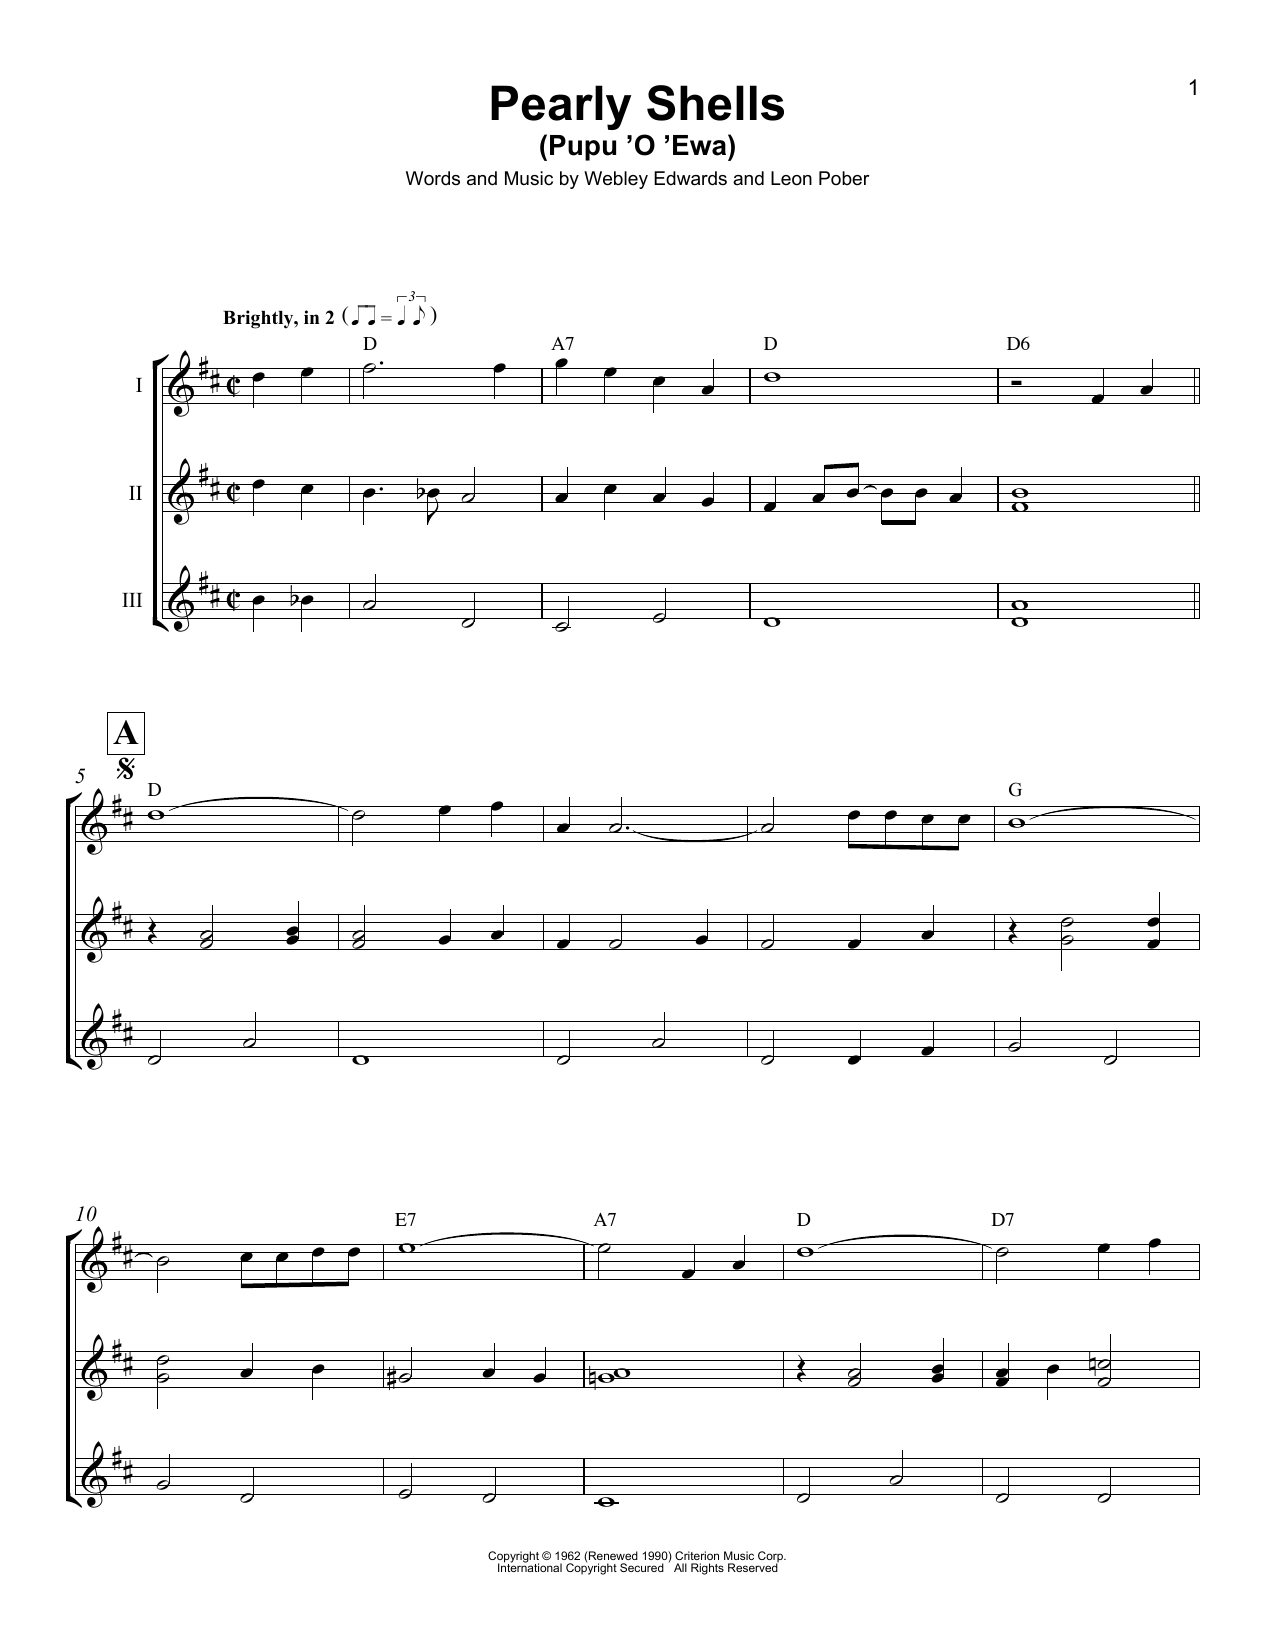 Webley Edwards Pearly Shells (Pupu O Ewa) Sheet Music Notes & Chords for Ukulele Ensemble - Download or Print PDF